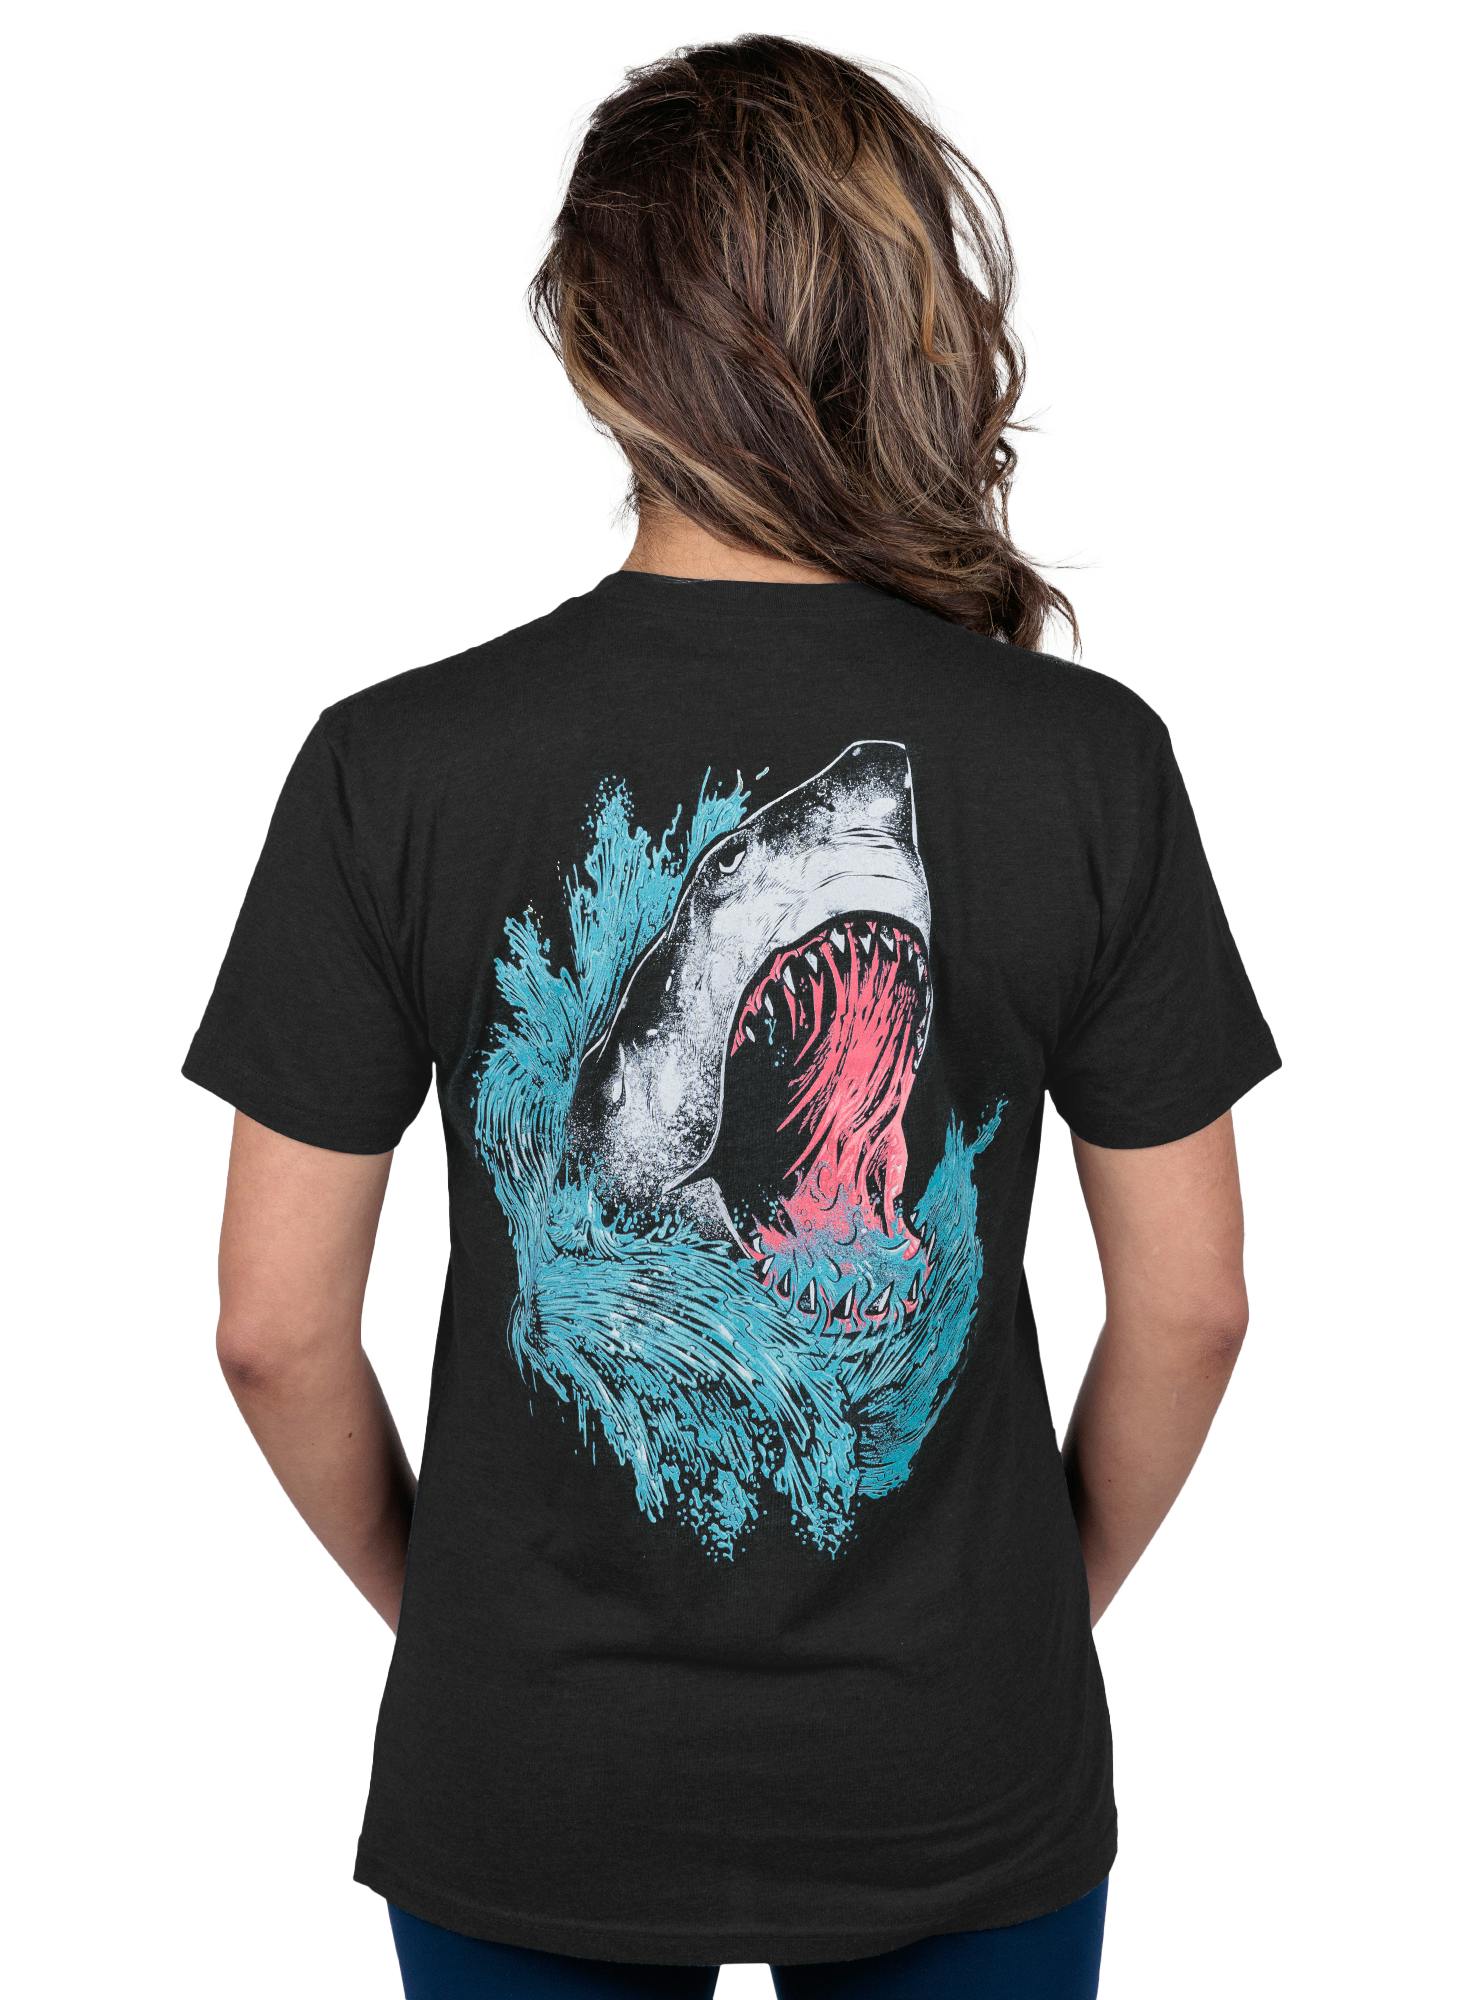 Peolink Apex Predator T-Shirt